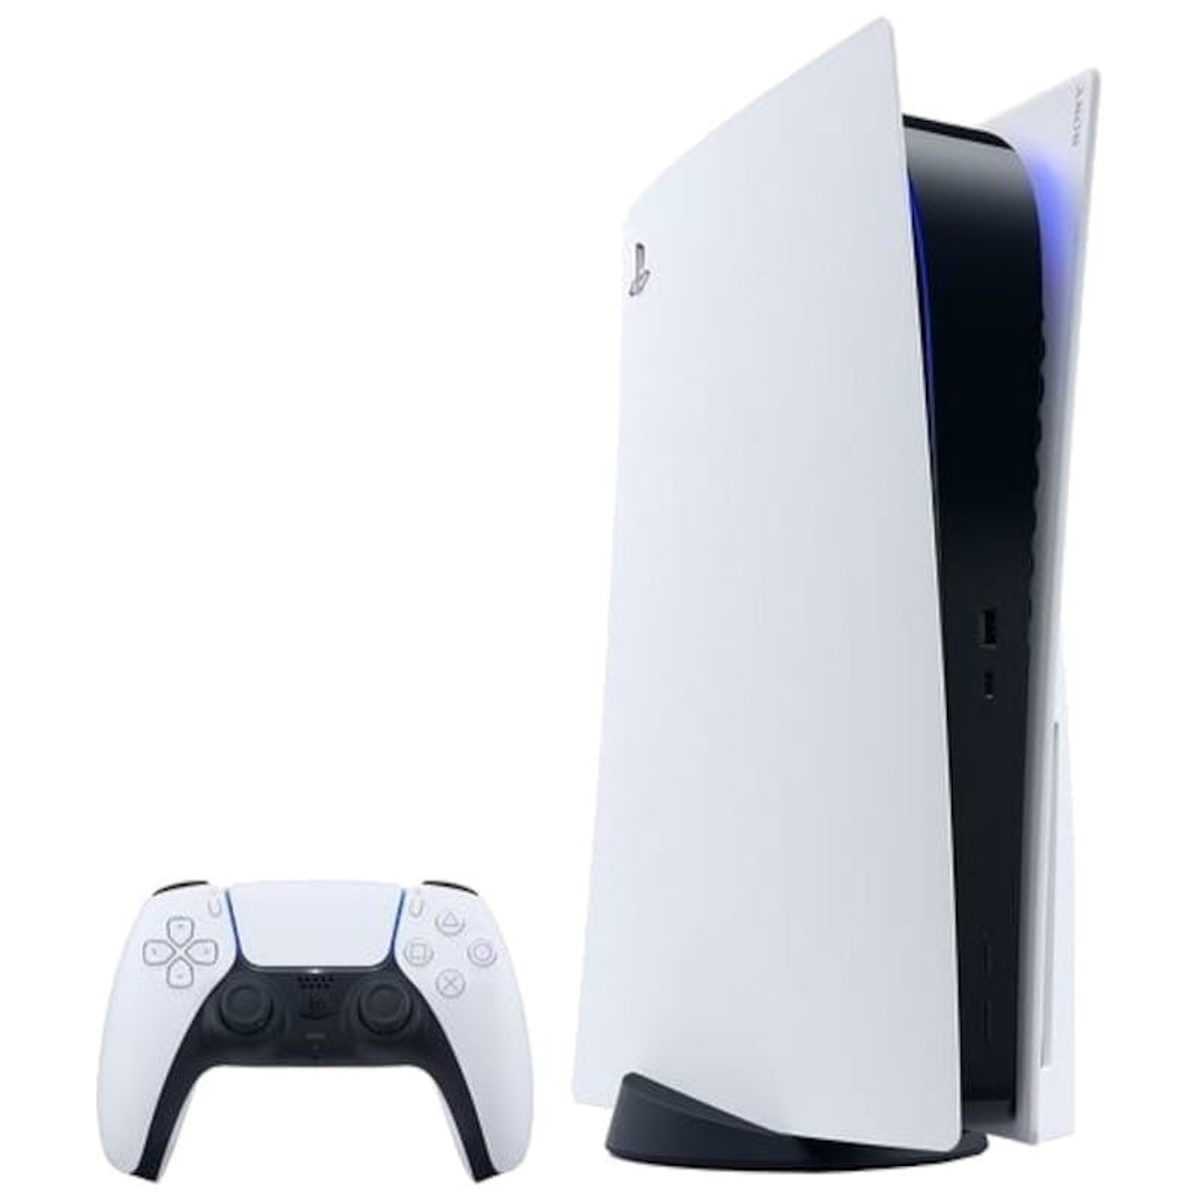 PlayStation 5 Pro: uma potência de console